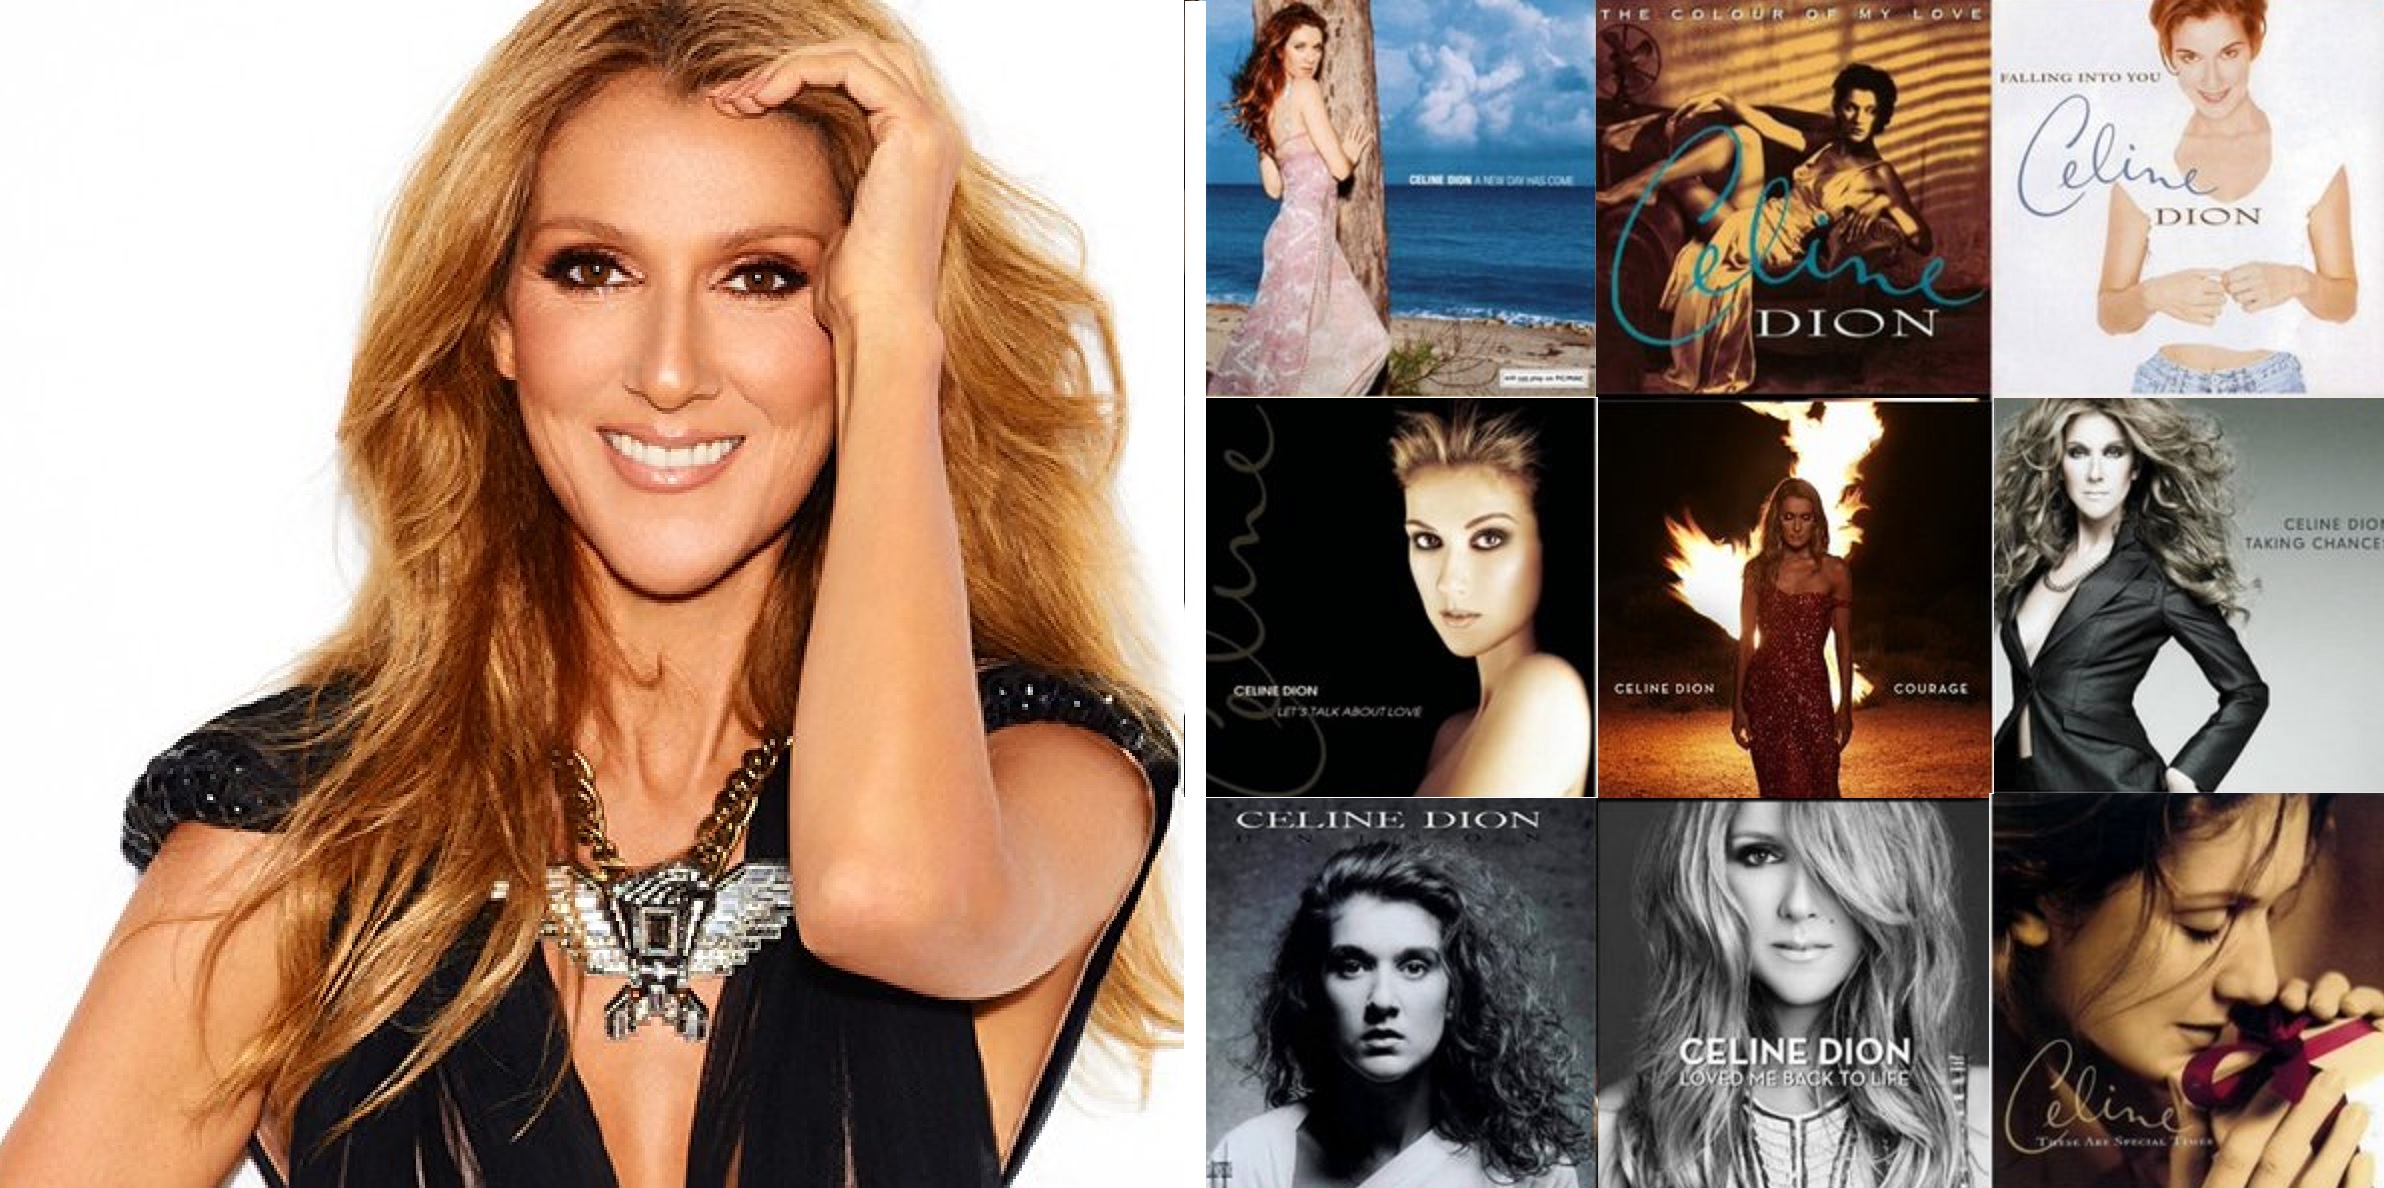 POLL: Which Is Celine Dion’s Best Album? Vote Here!